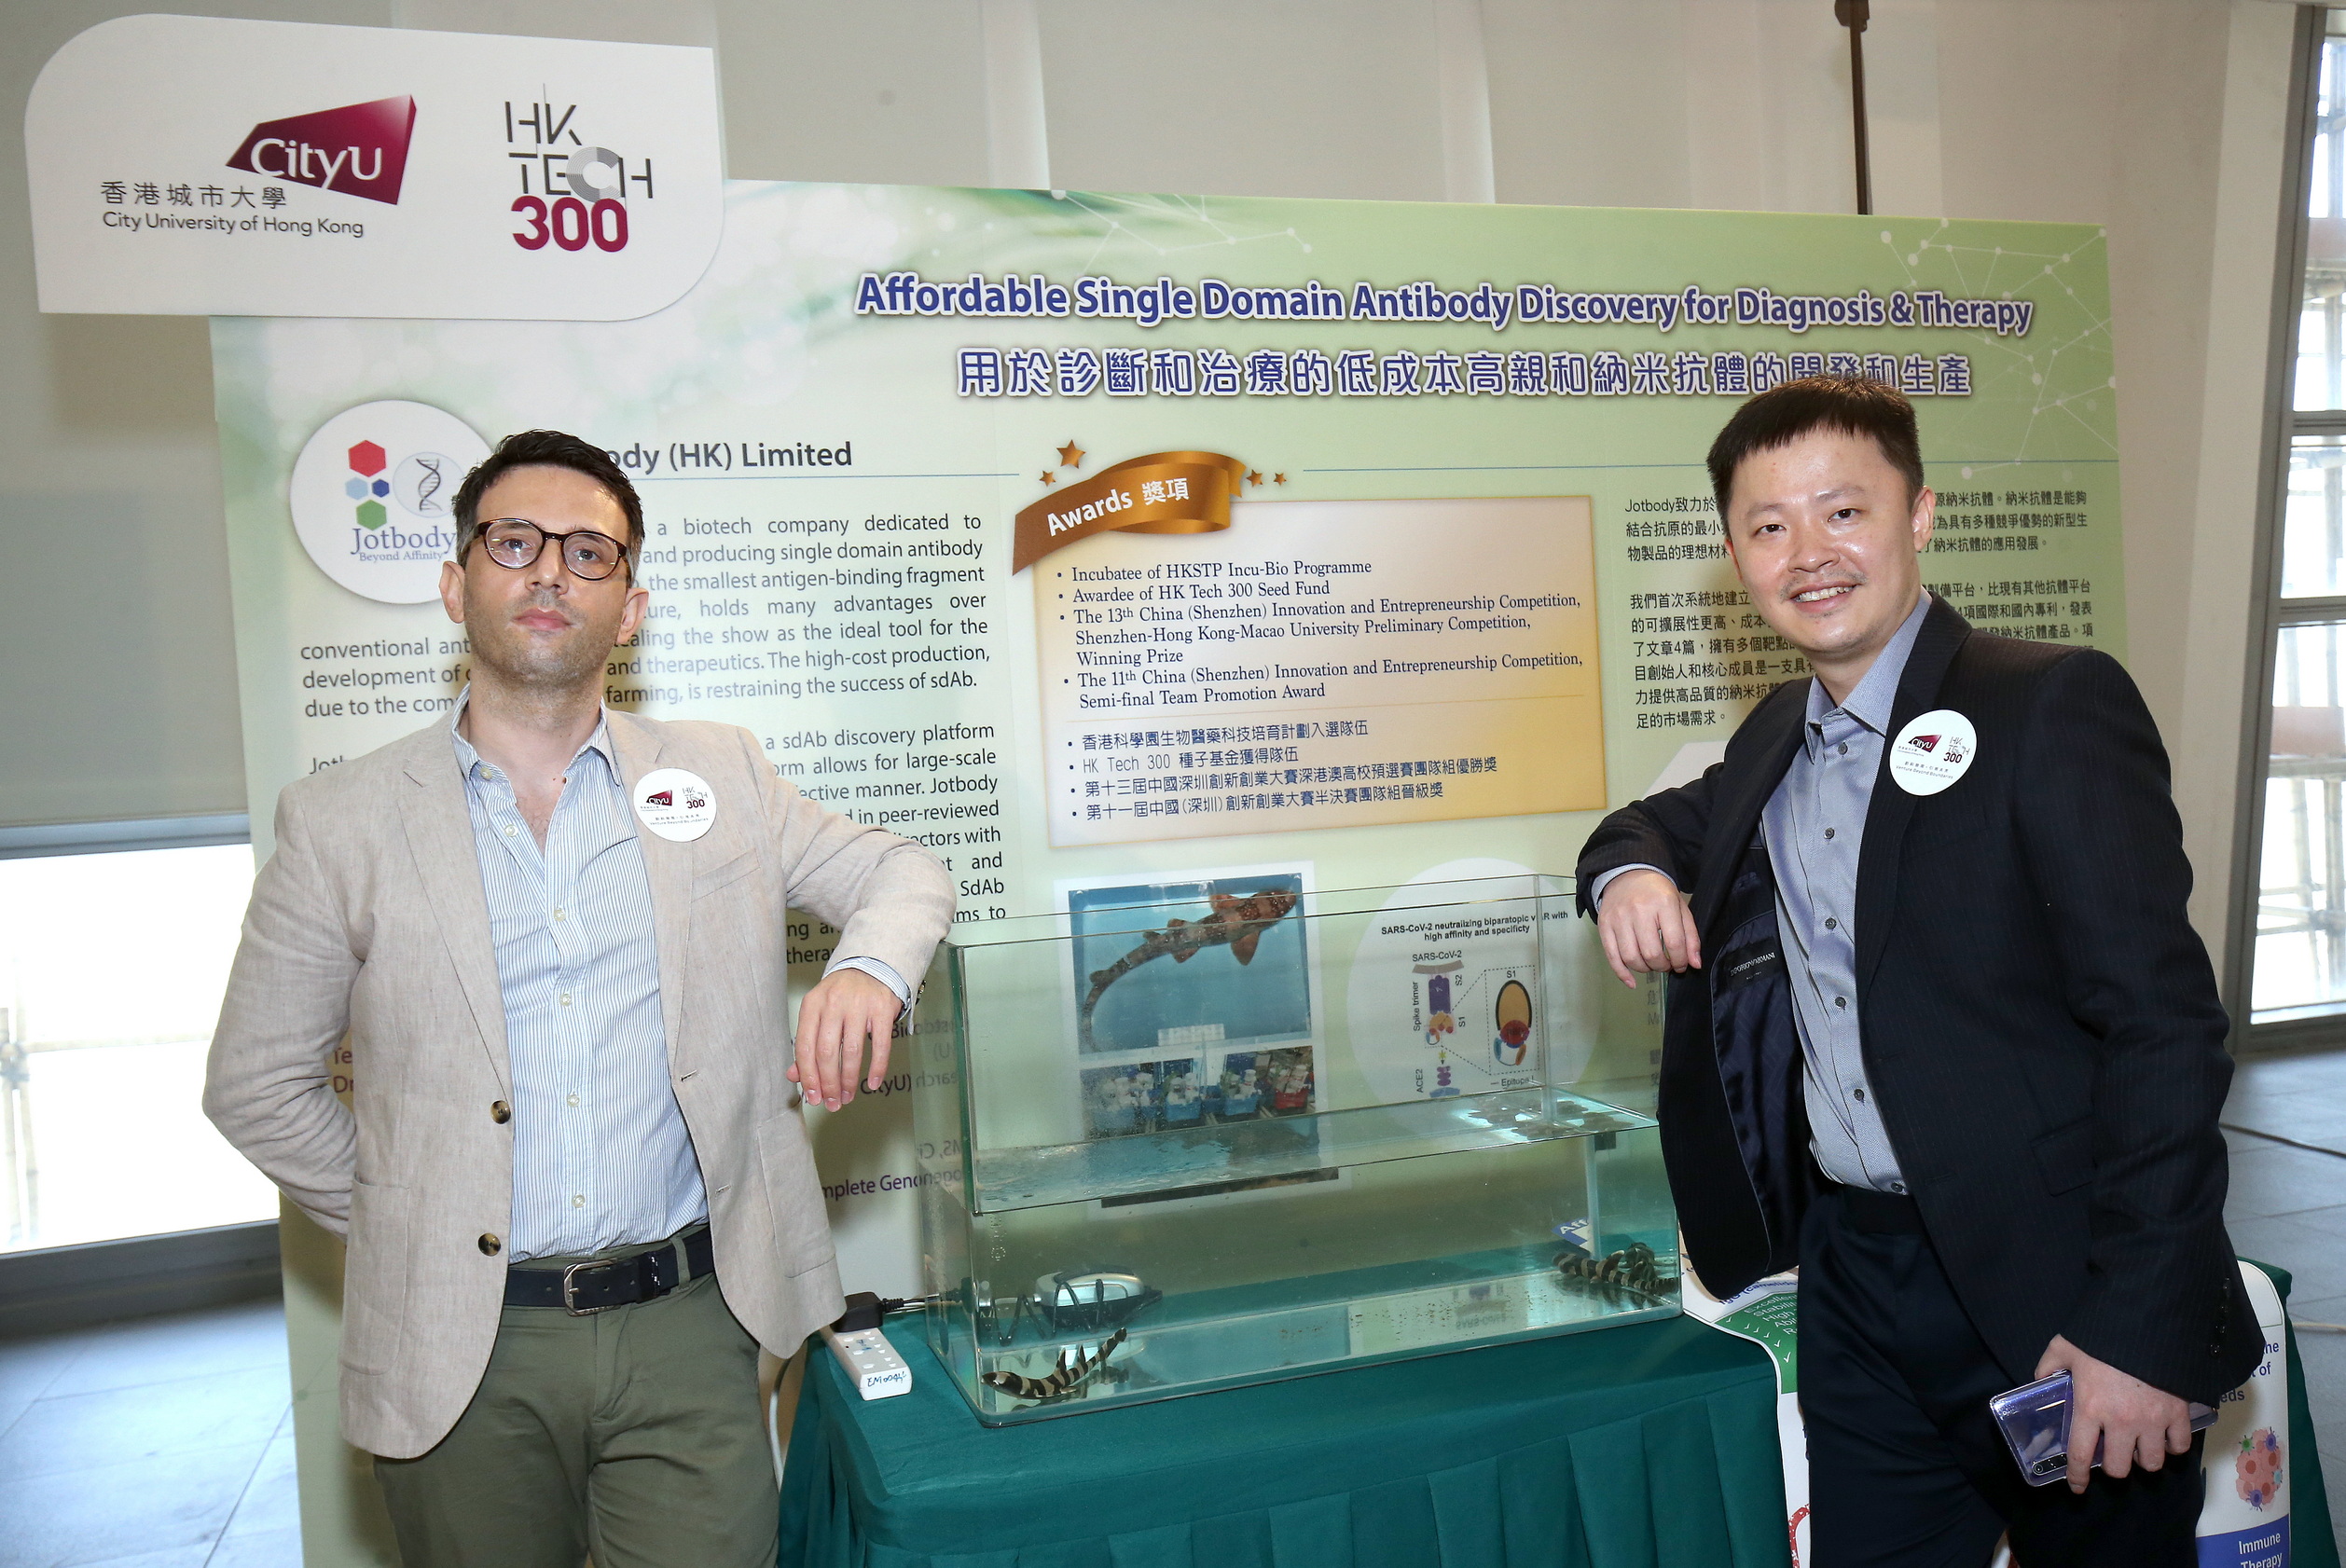 (From left) Dr Marco Pirisinu and Professor Shi Jiahai of Jotbody.